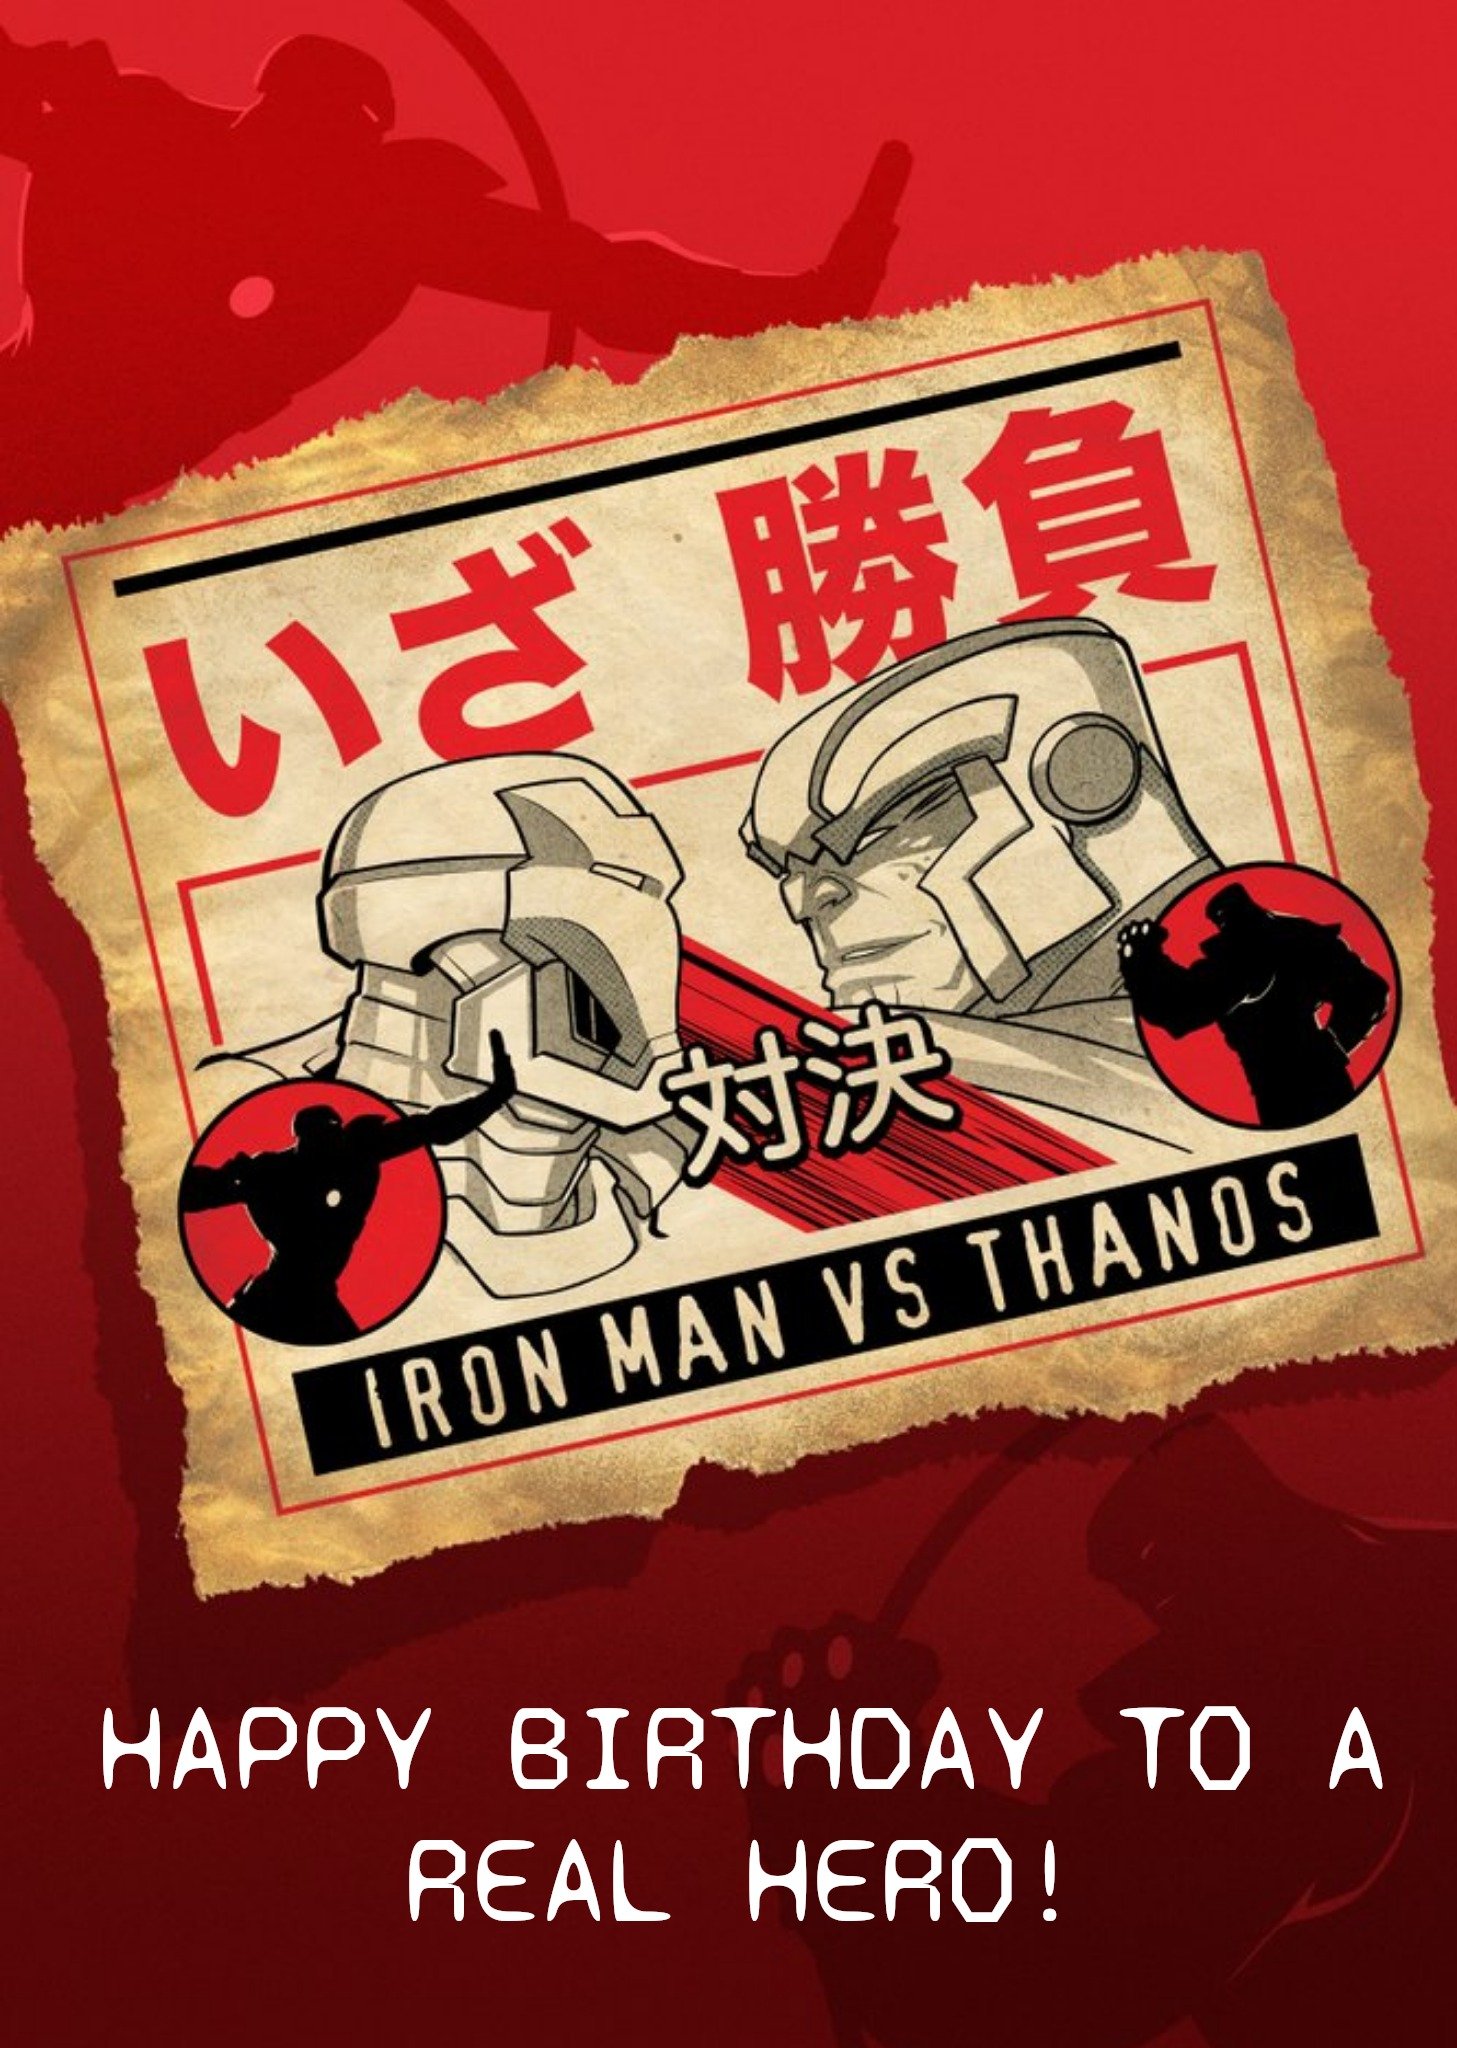 Disney Marvel Comics Avengers Iron Man Vs Thanos Birthday Card Ecard